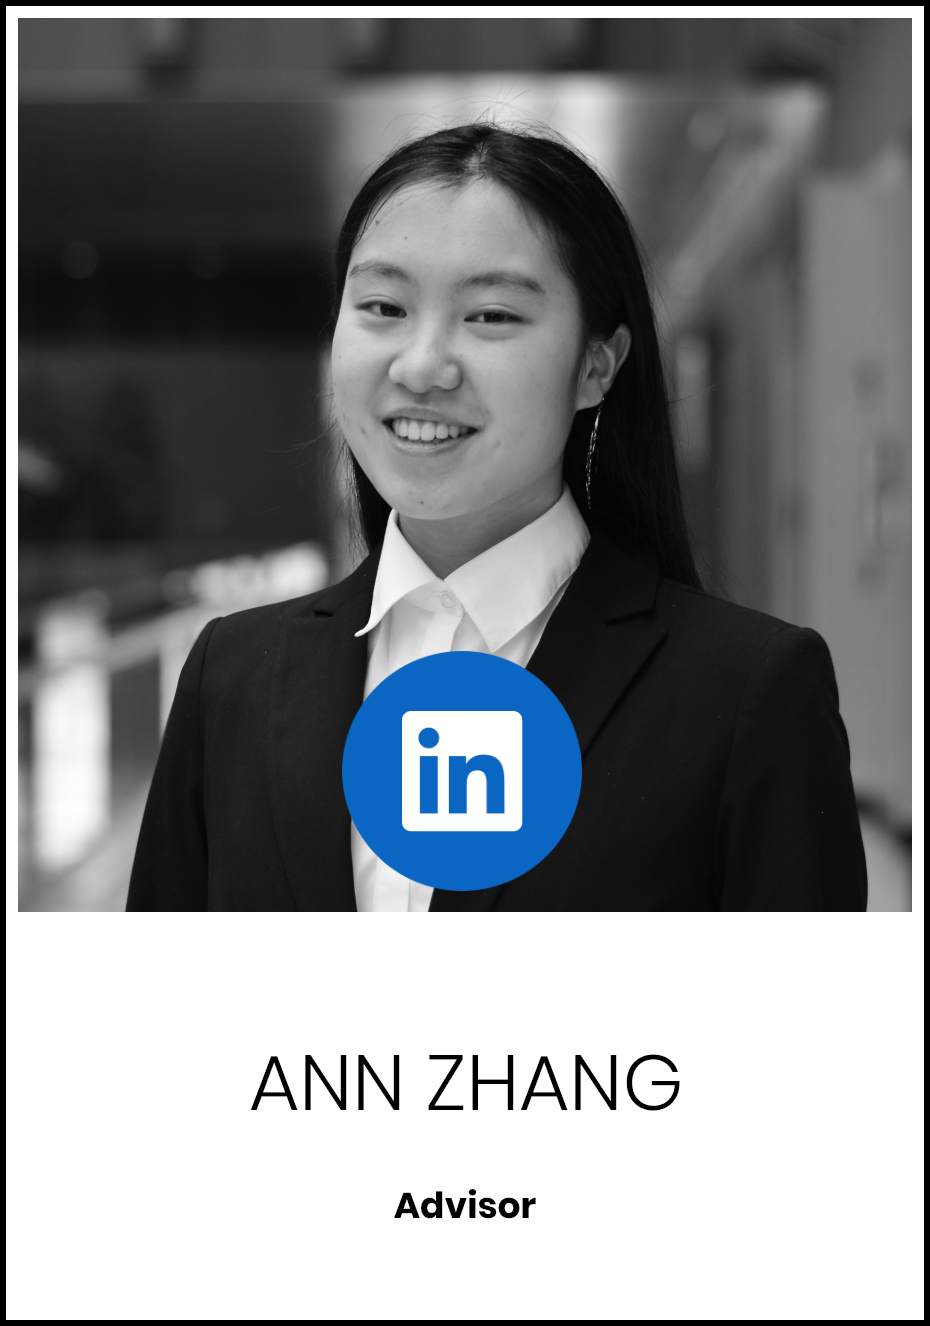 Ann Zhang